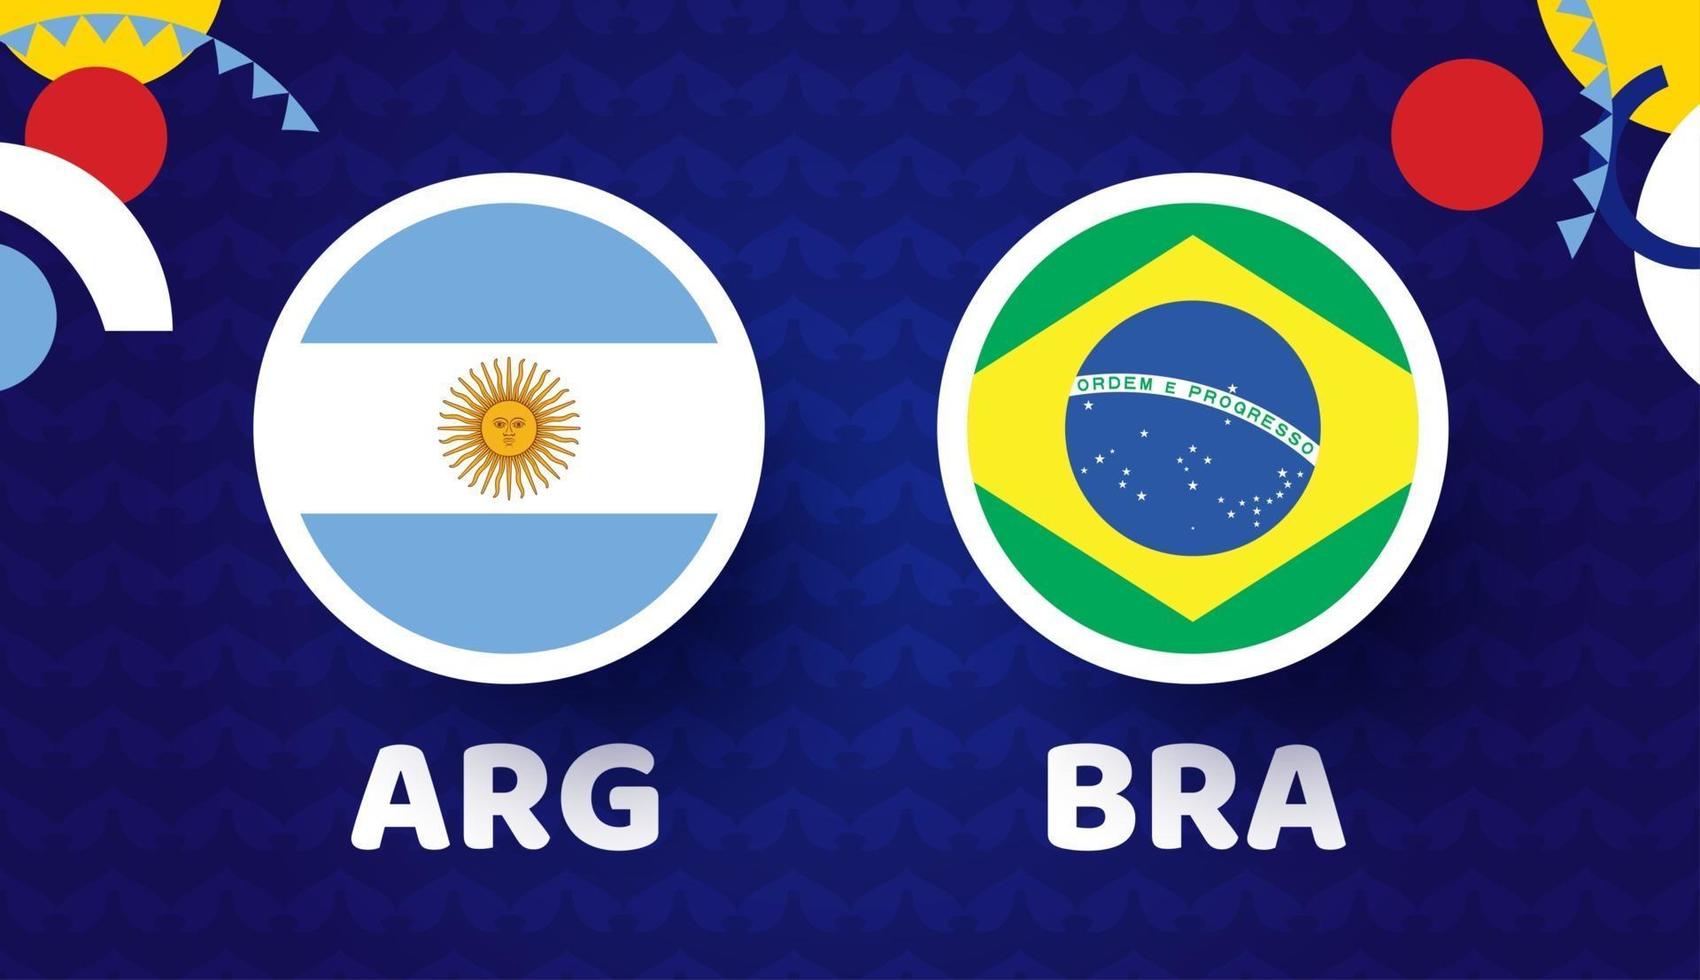 argentina vs brazil match vector illustration South america Football 2021 championship